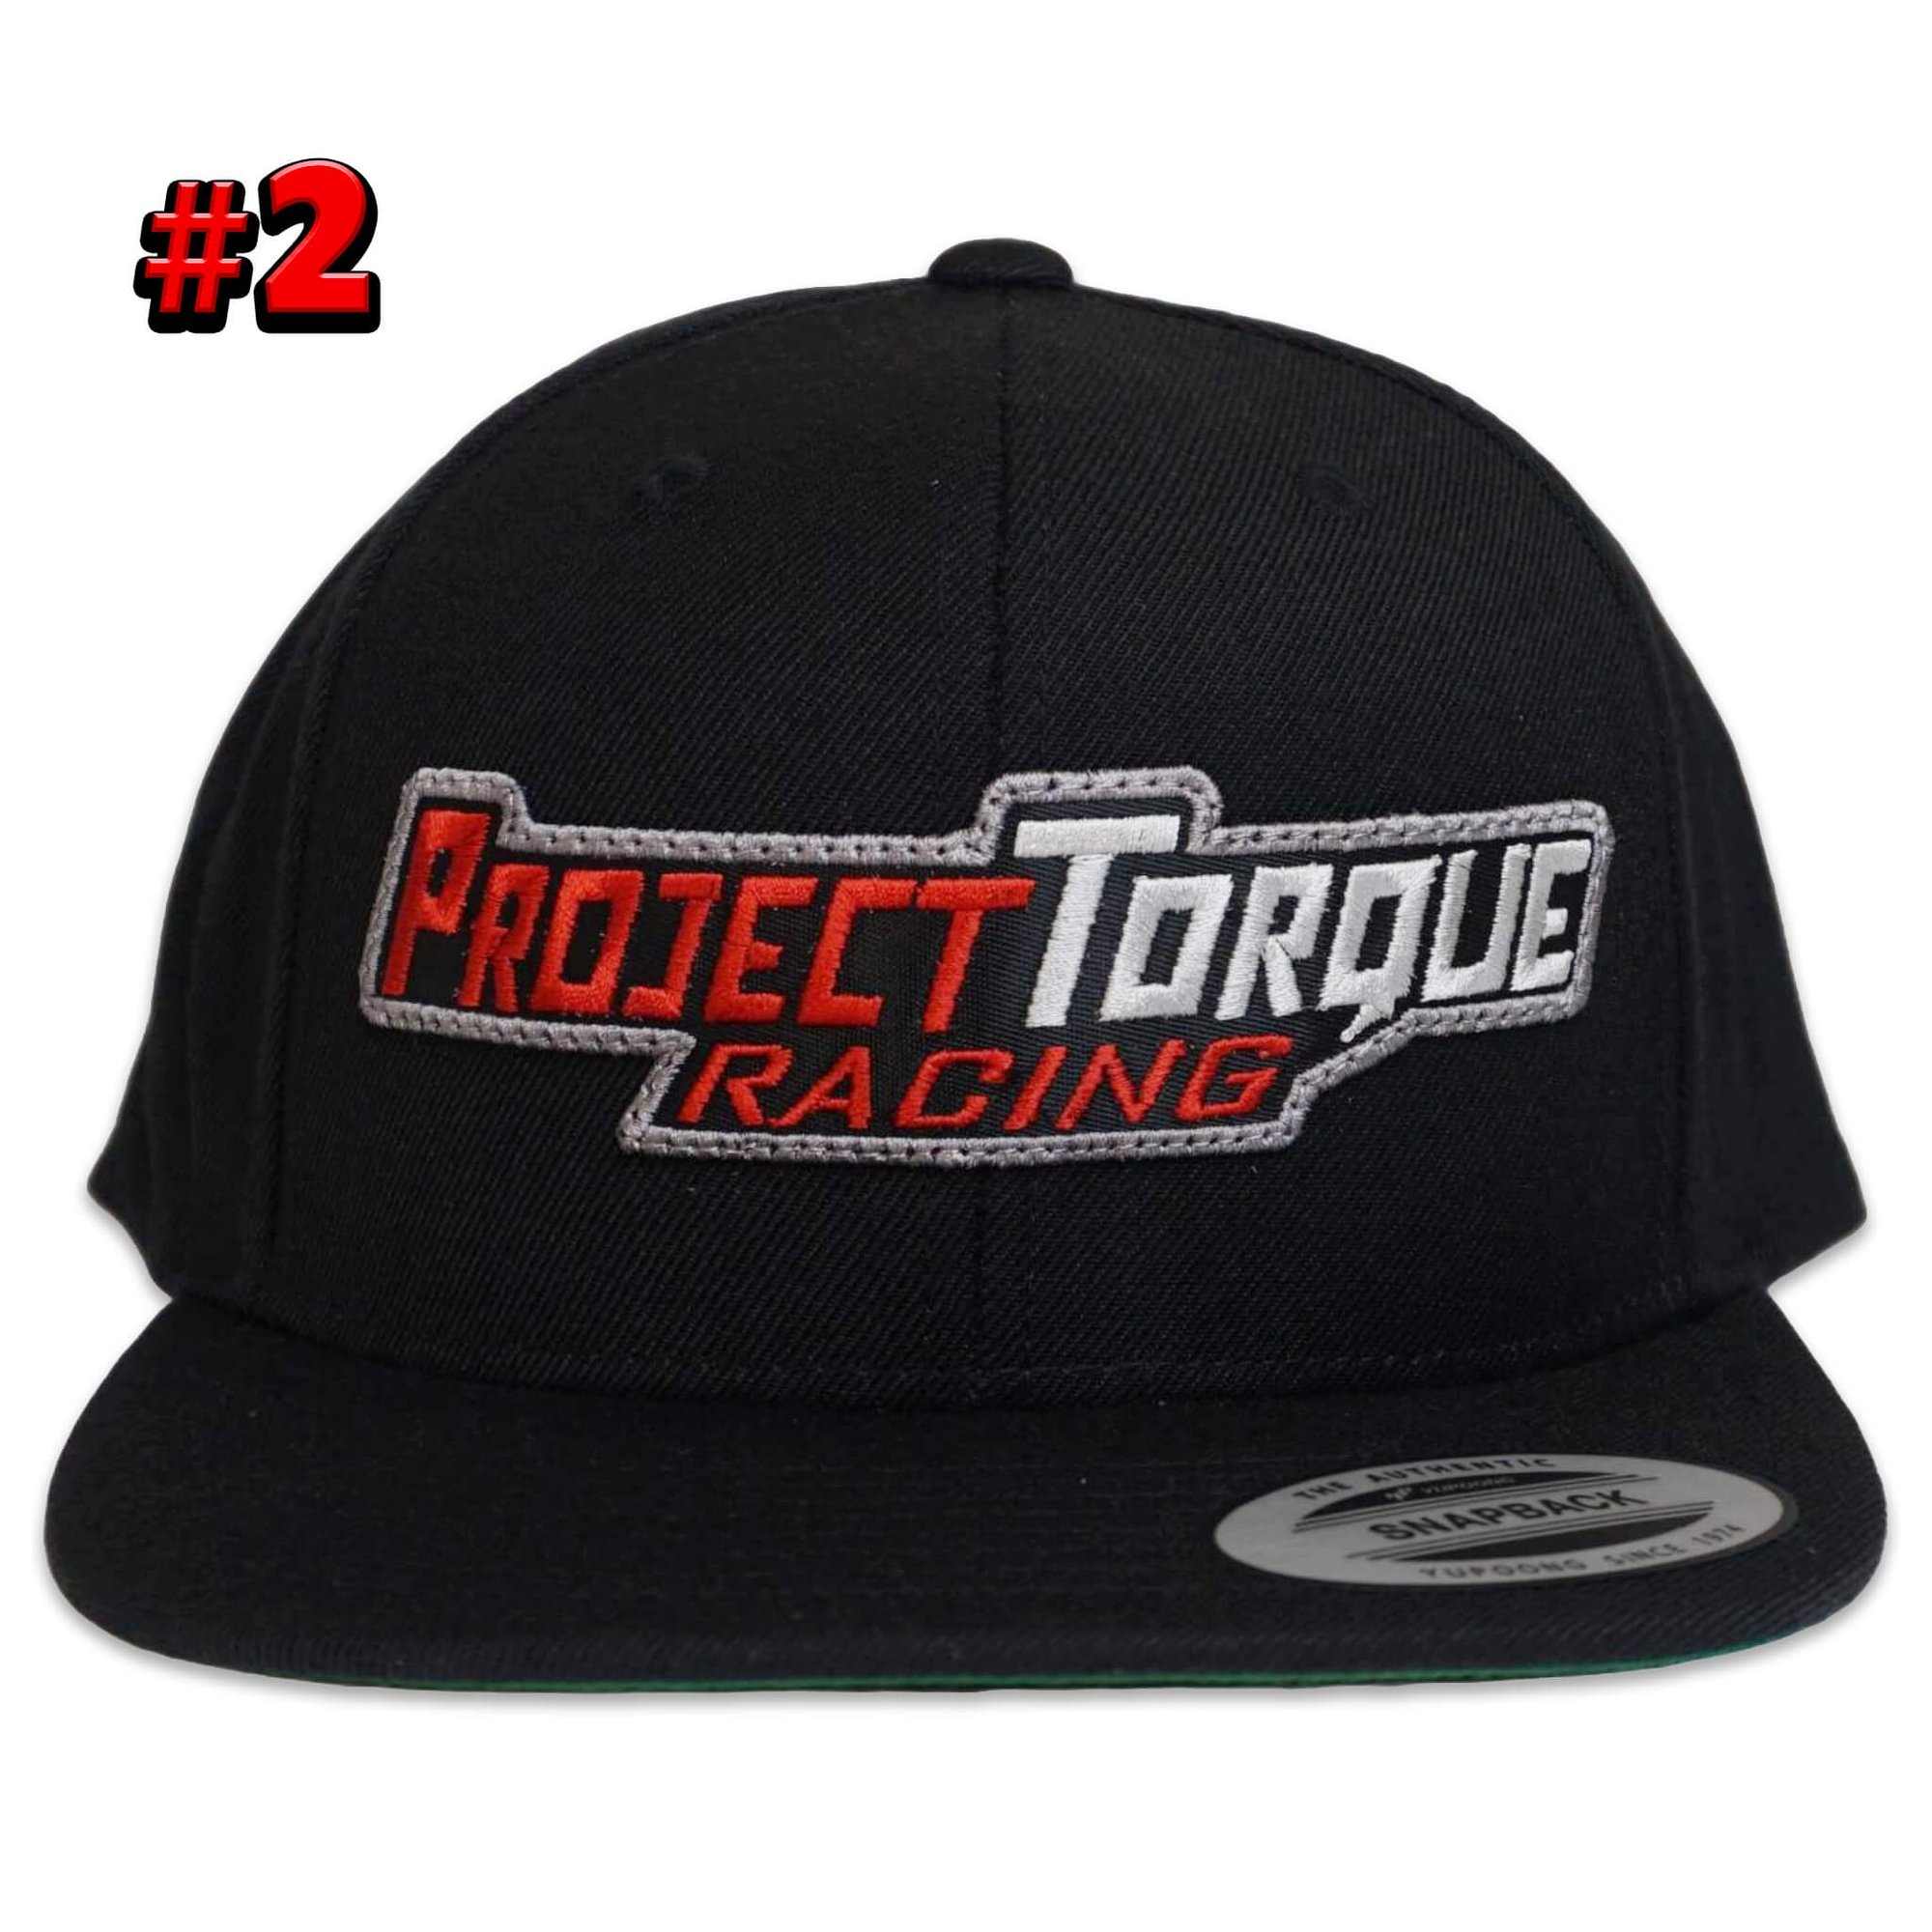 PROJECT TORQUE RACING HATS | Project Torque